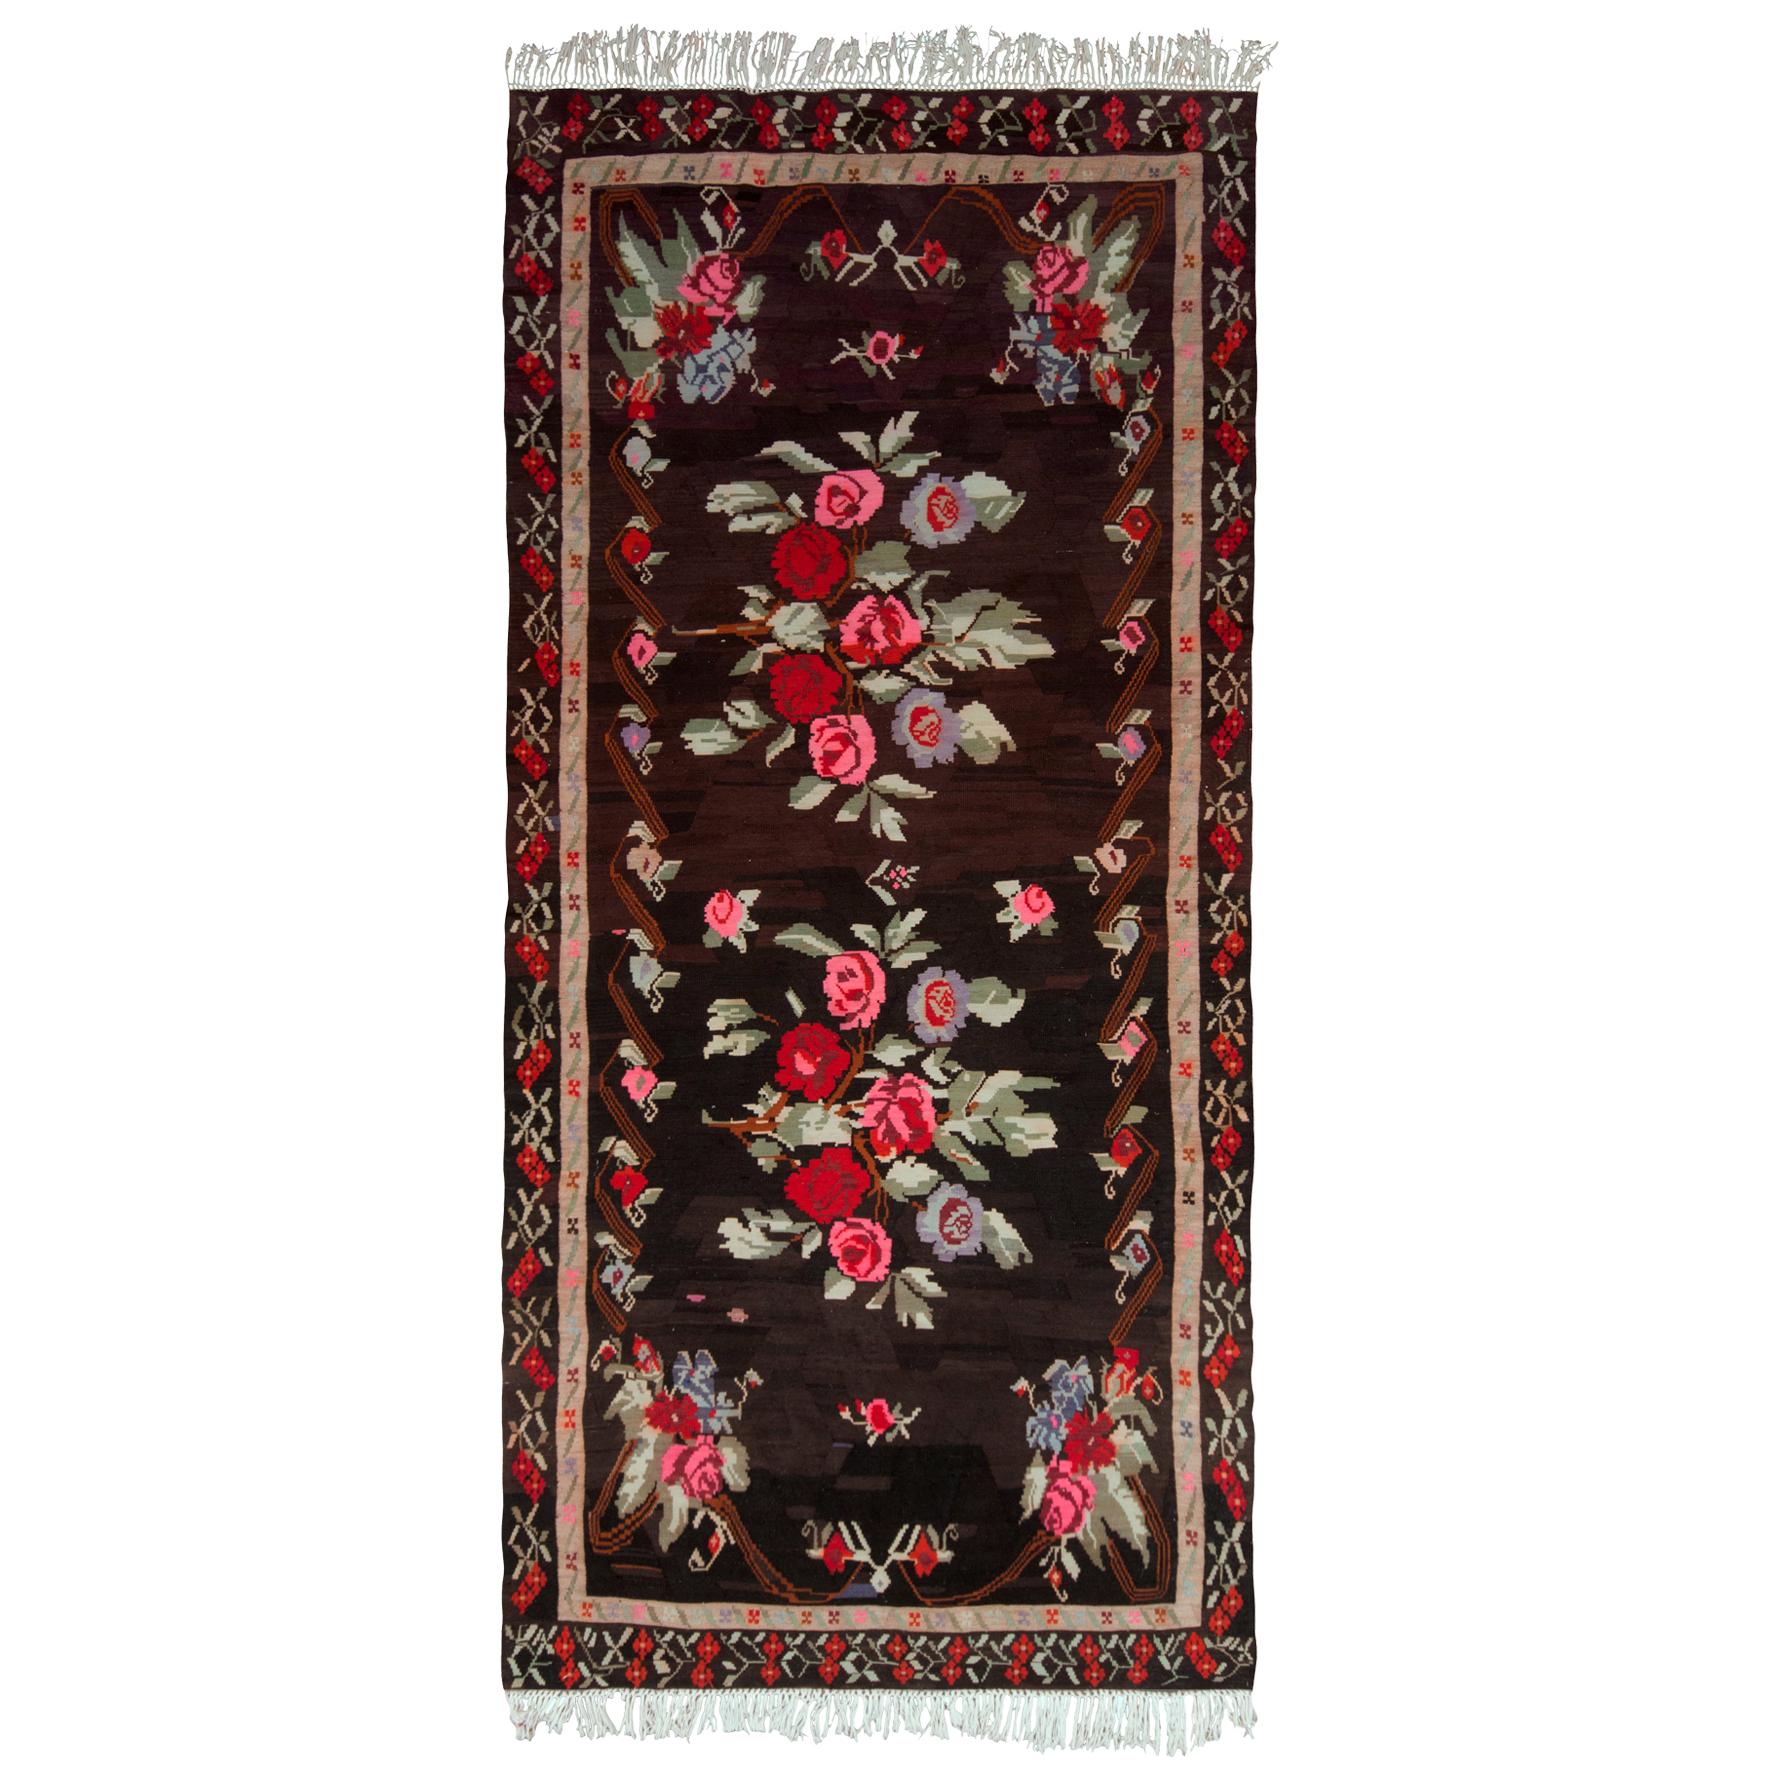 Midcentury Vintage Kilim Rug Black Red Floral Turkish Flat-Weave by Rug & Kilim For Sale